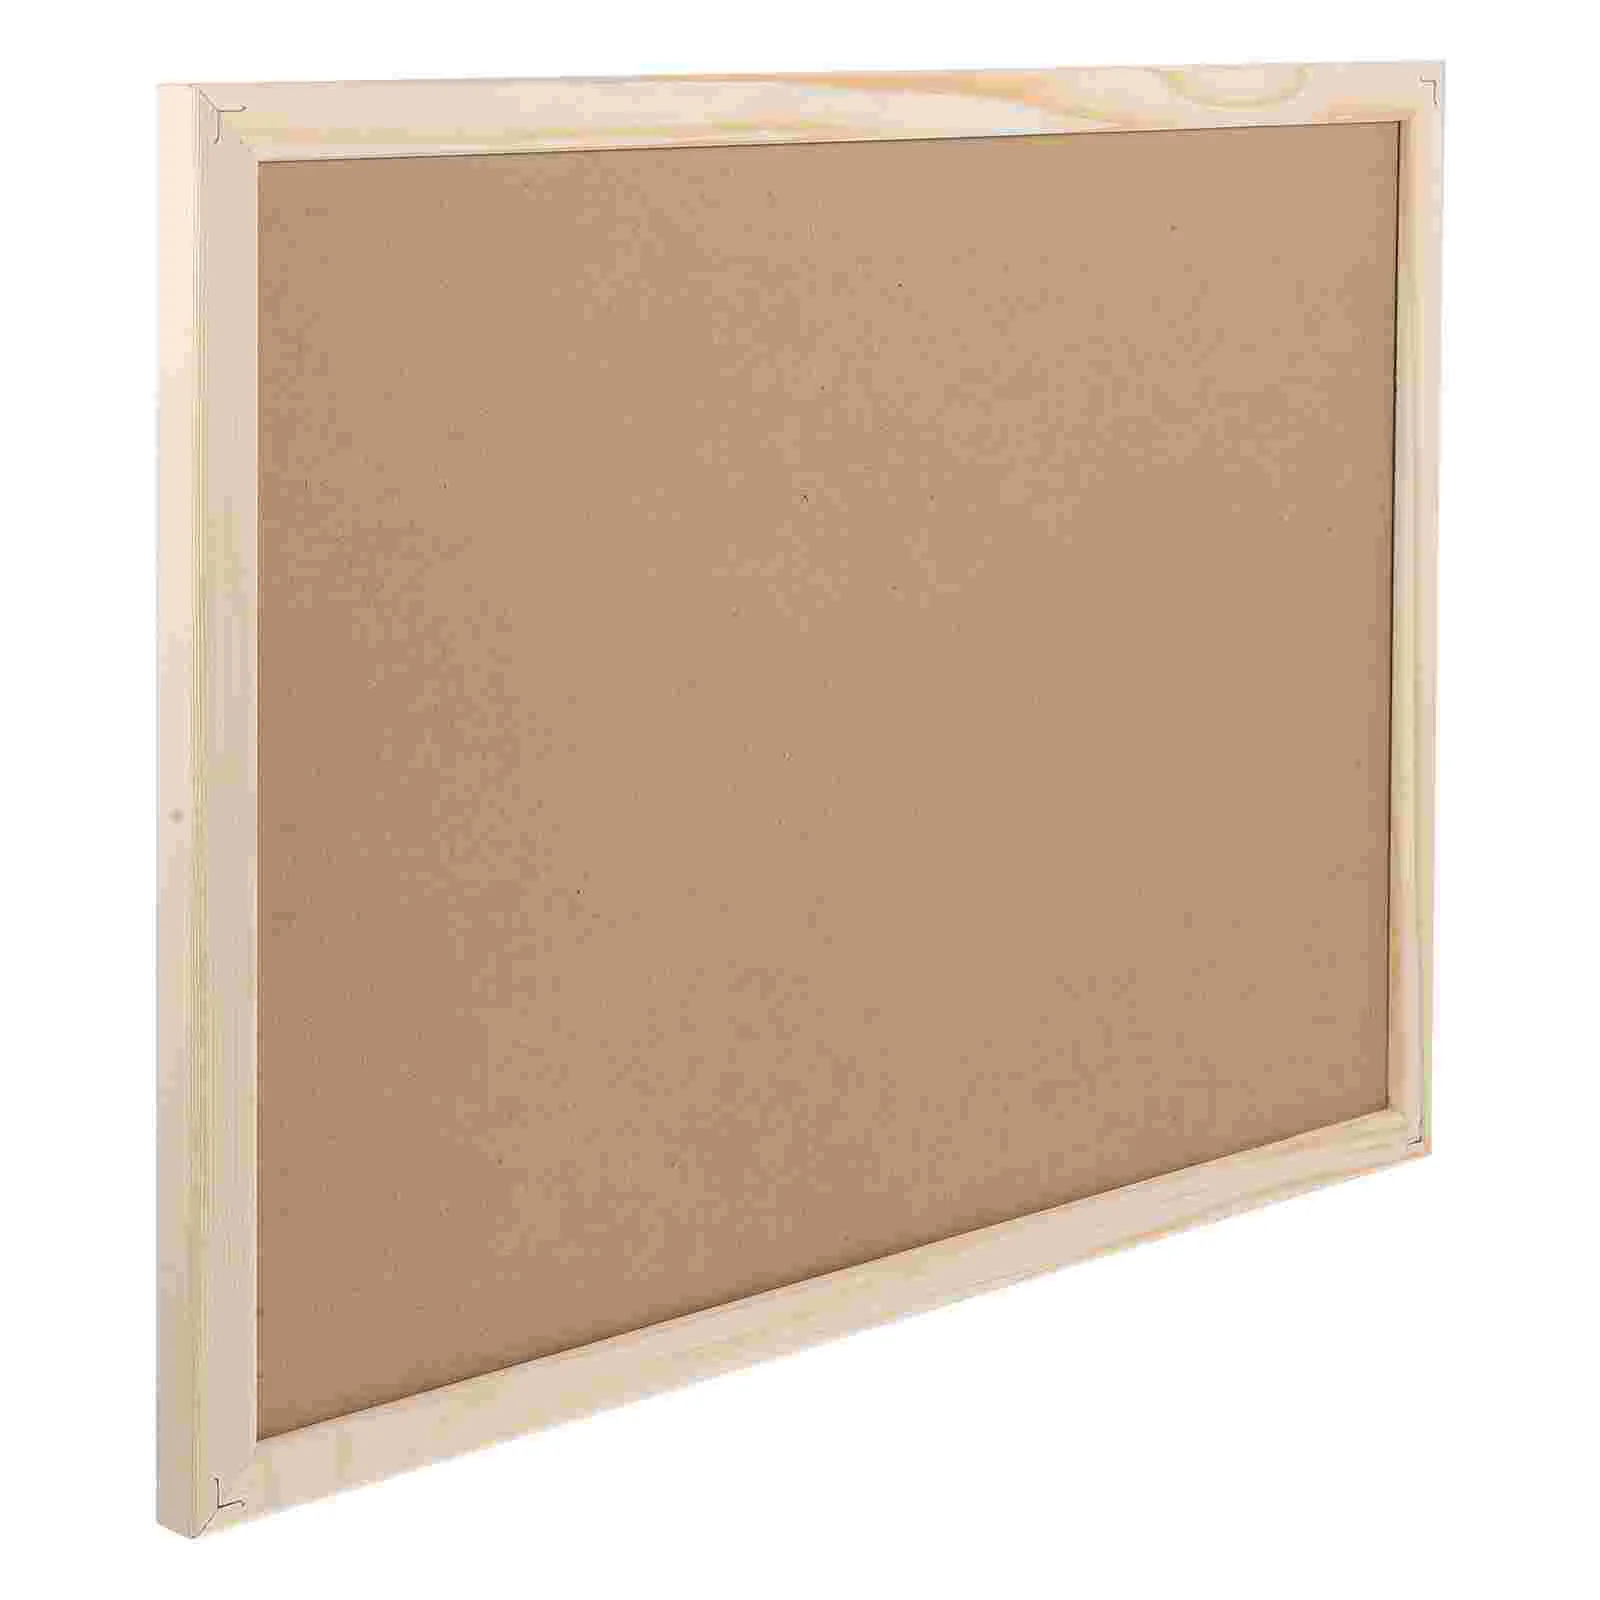 

Bulletin Board Boards Reminder Message Wall Cork Memo Accessories Corkboard Decorative for Walls Frameless Creative